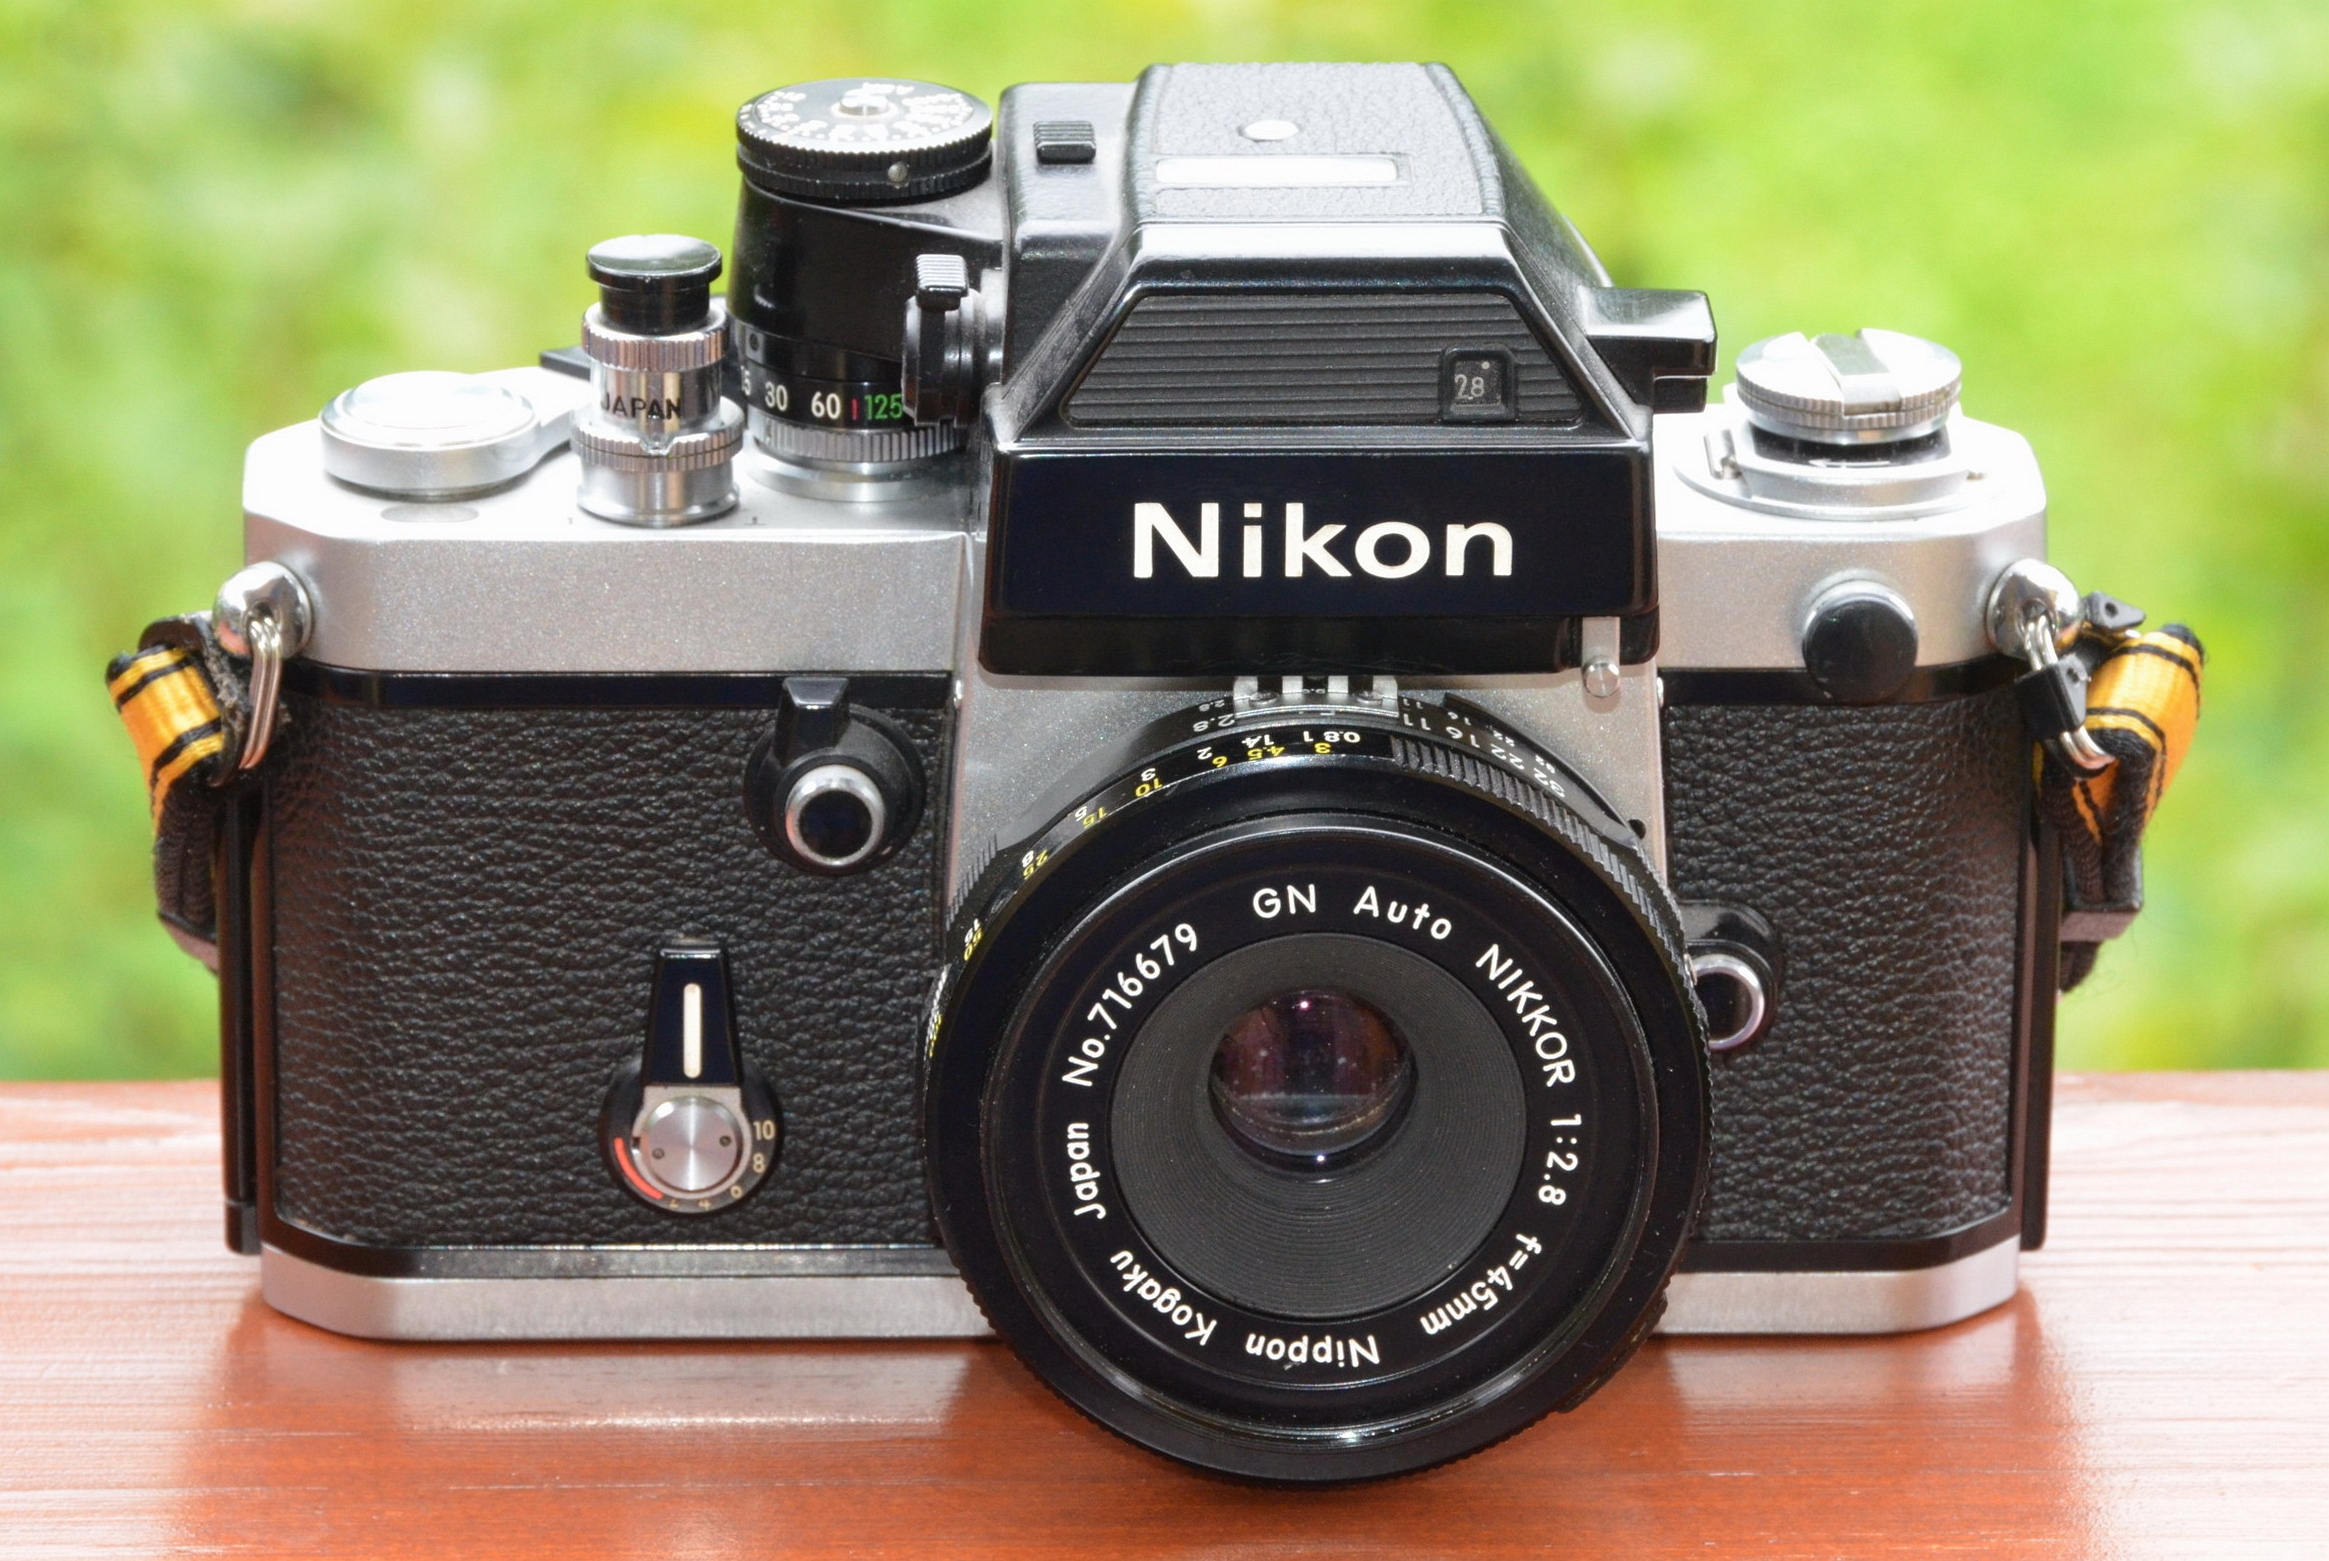 Nikon F2 SB SLR camera with GN Auto Nikkor 2,8 f=45mm lens